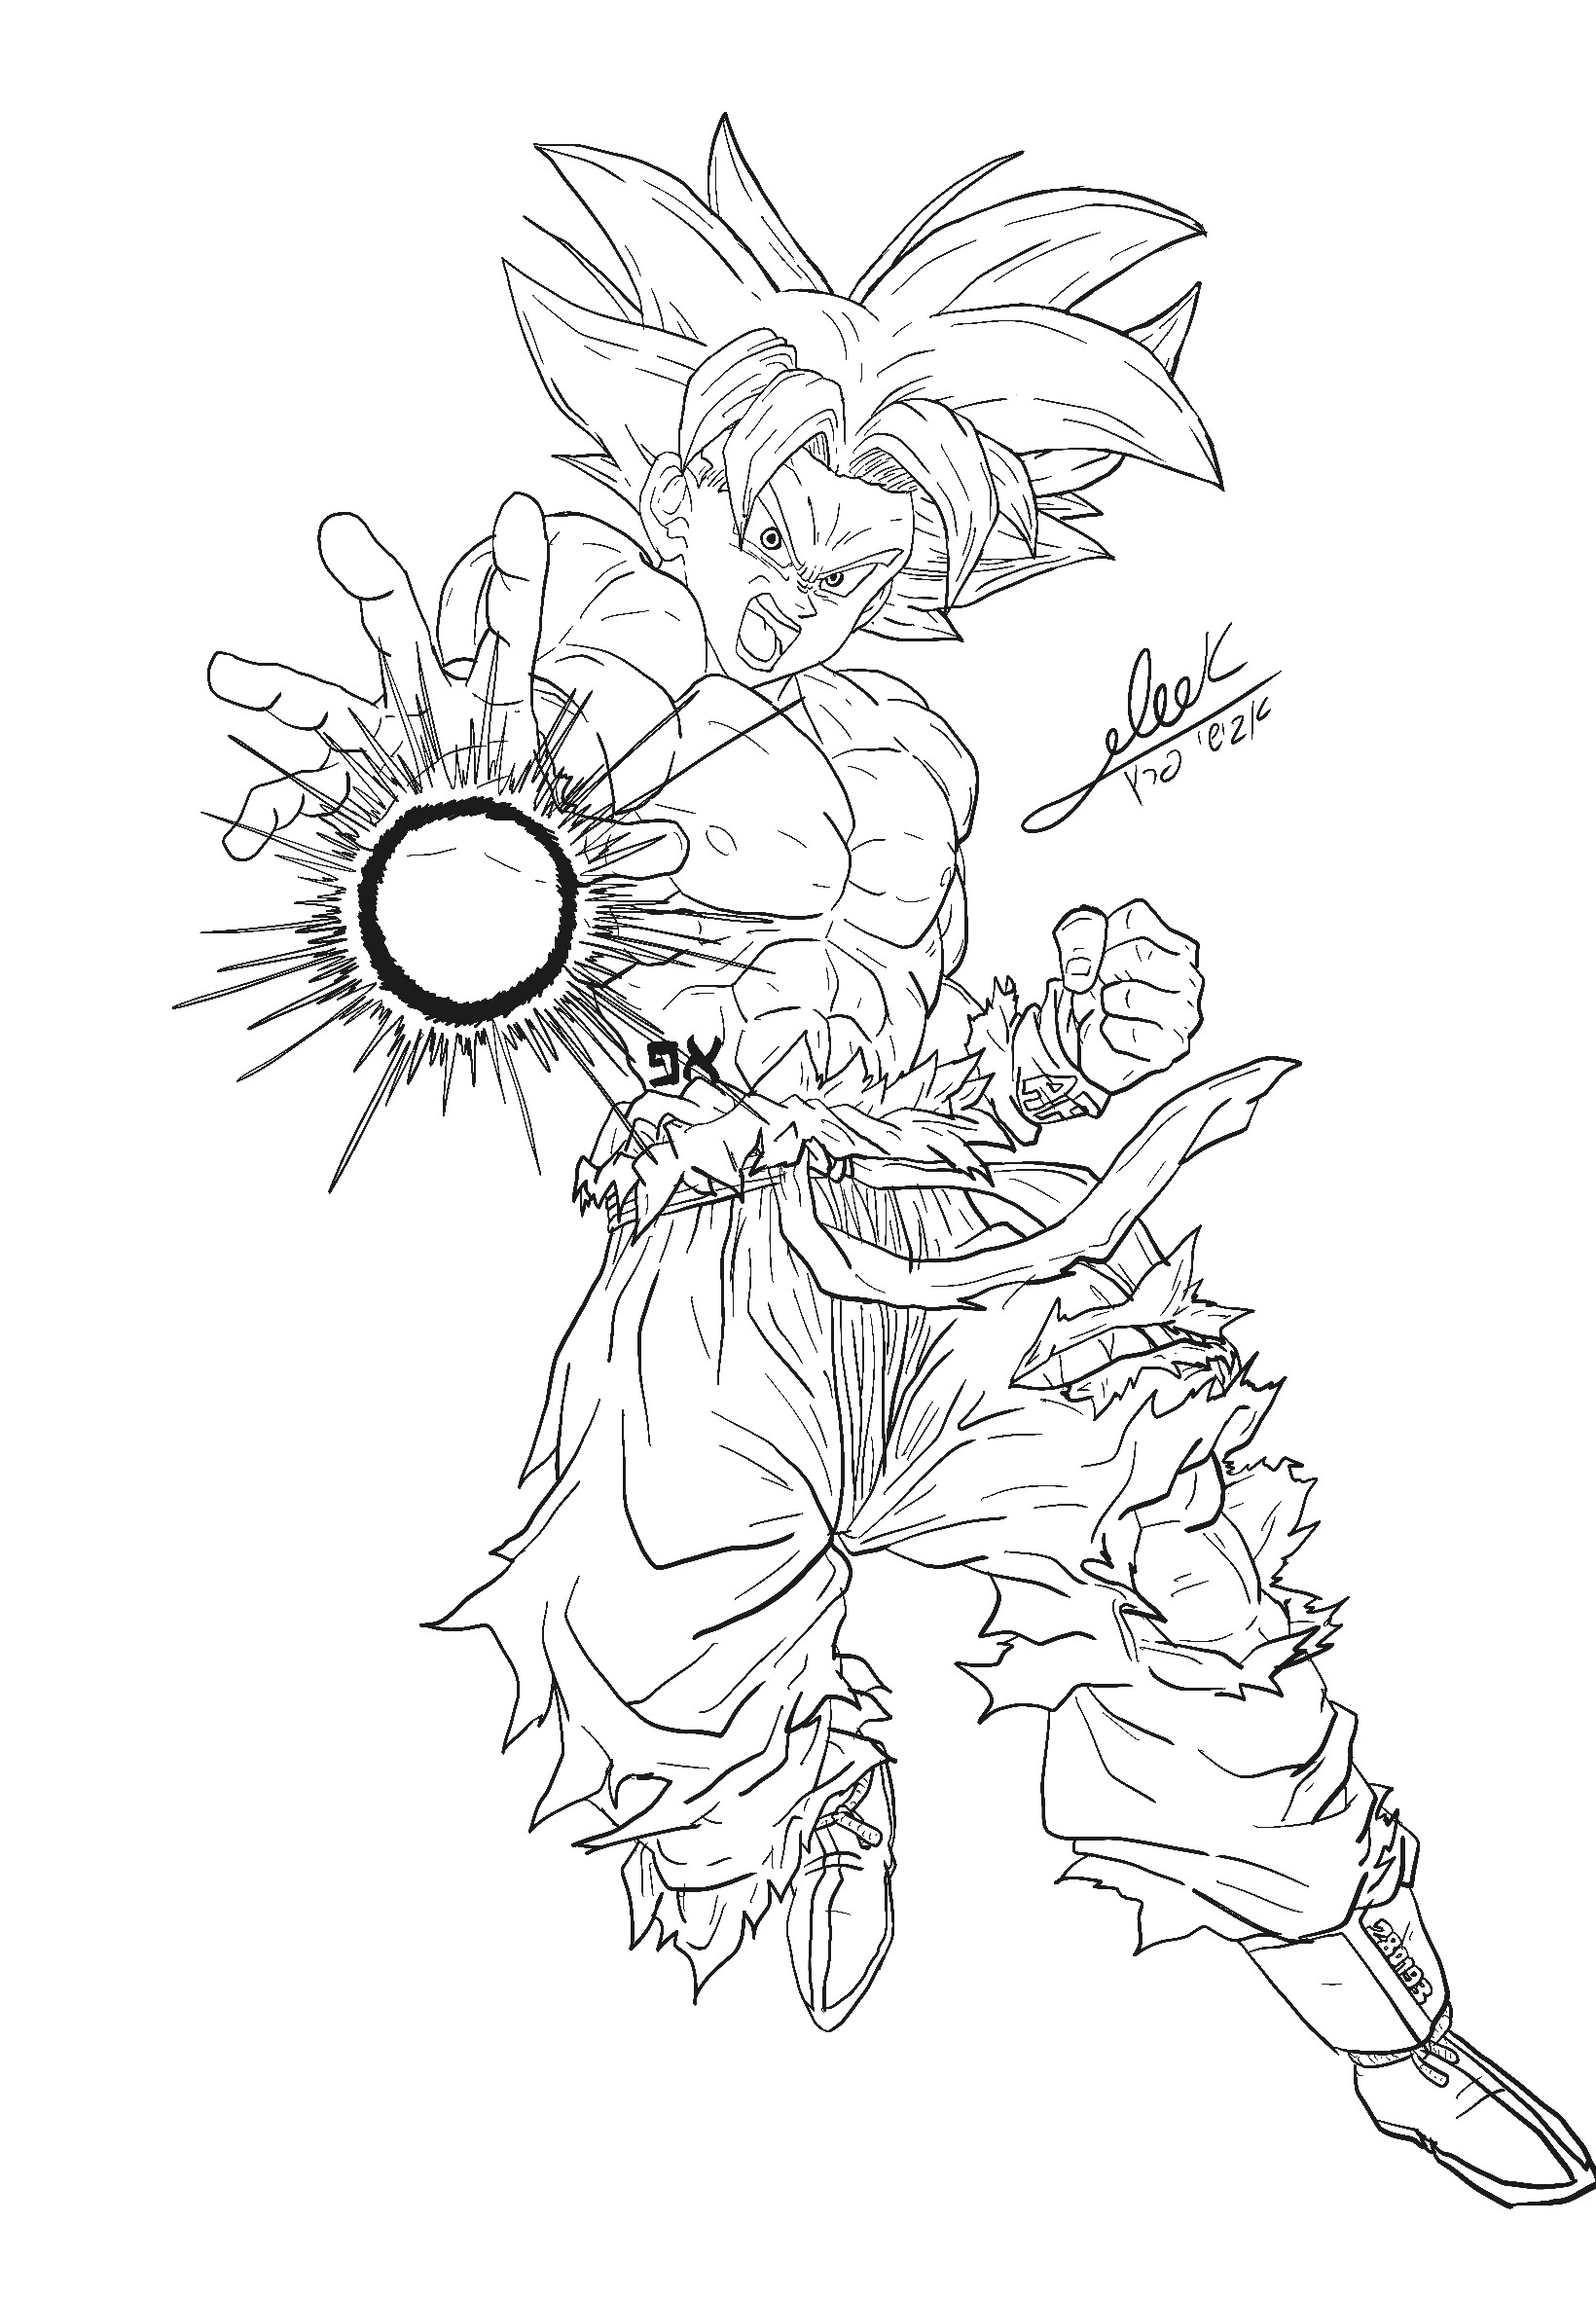 SPOILER] [OC] Decided to draw UI Goku in the old Namek manga style. Hope  you like it! : r/dbz